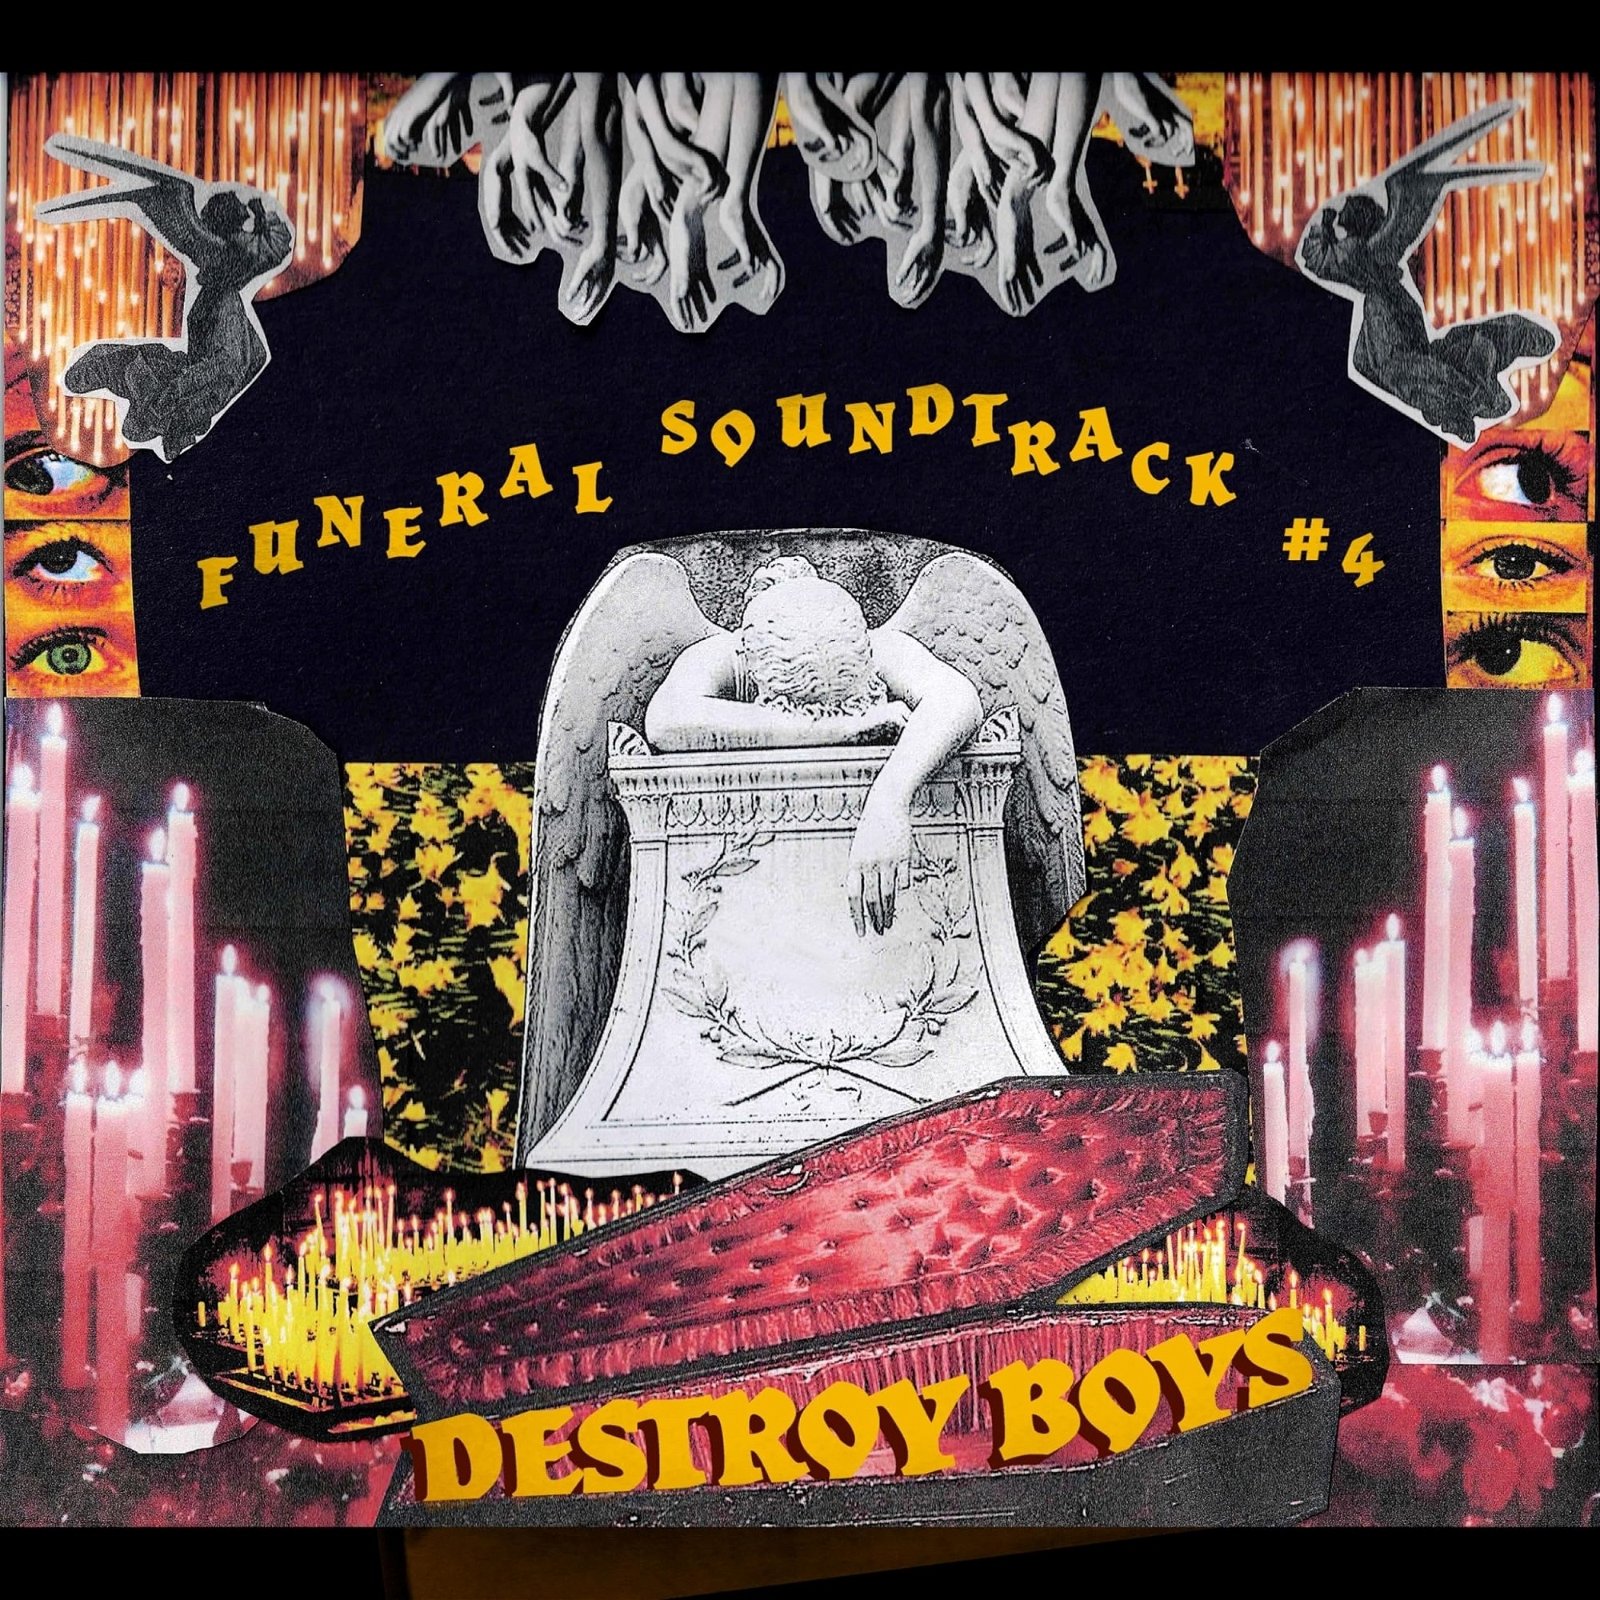 CD Shop - DESTROY BOYS FUNERAL SOUNDTRACK #4